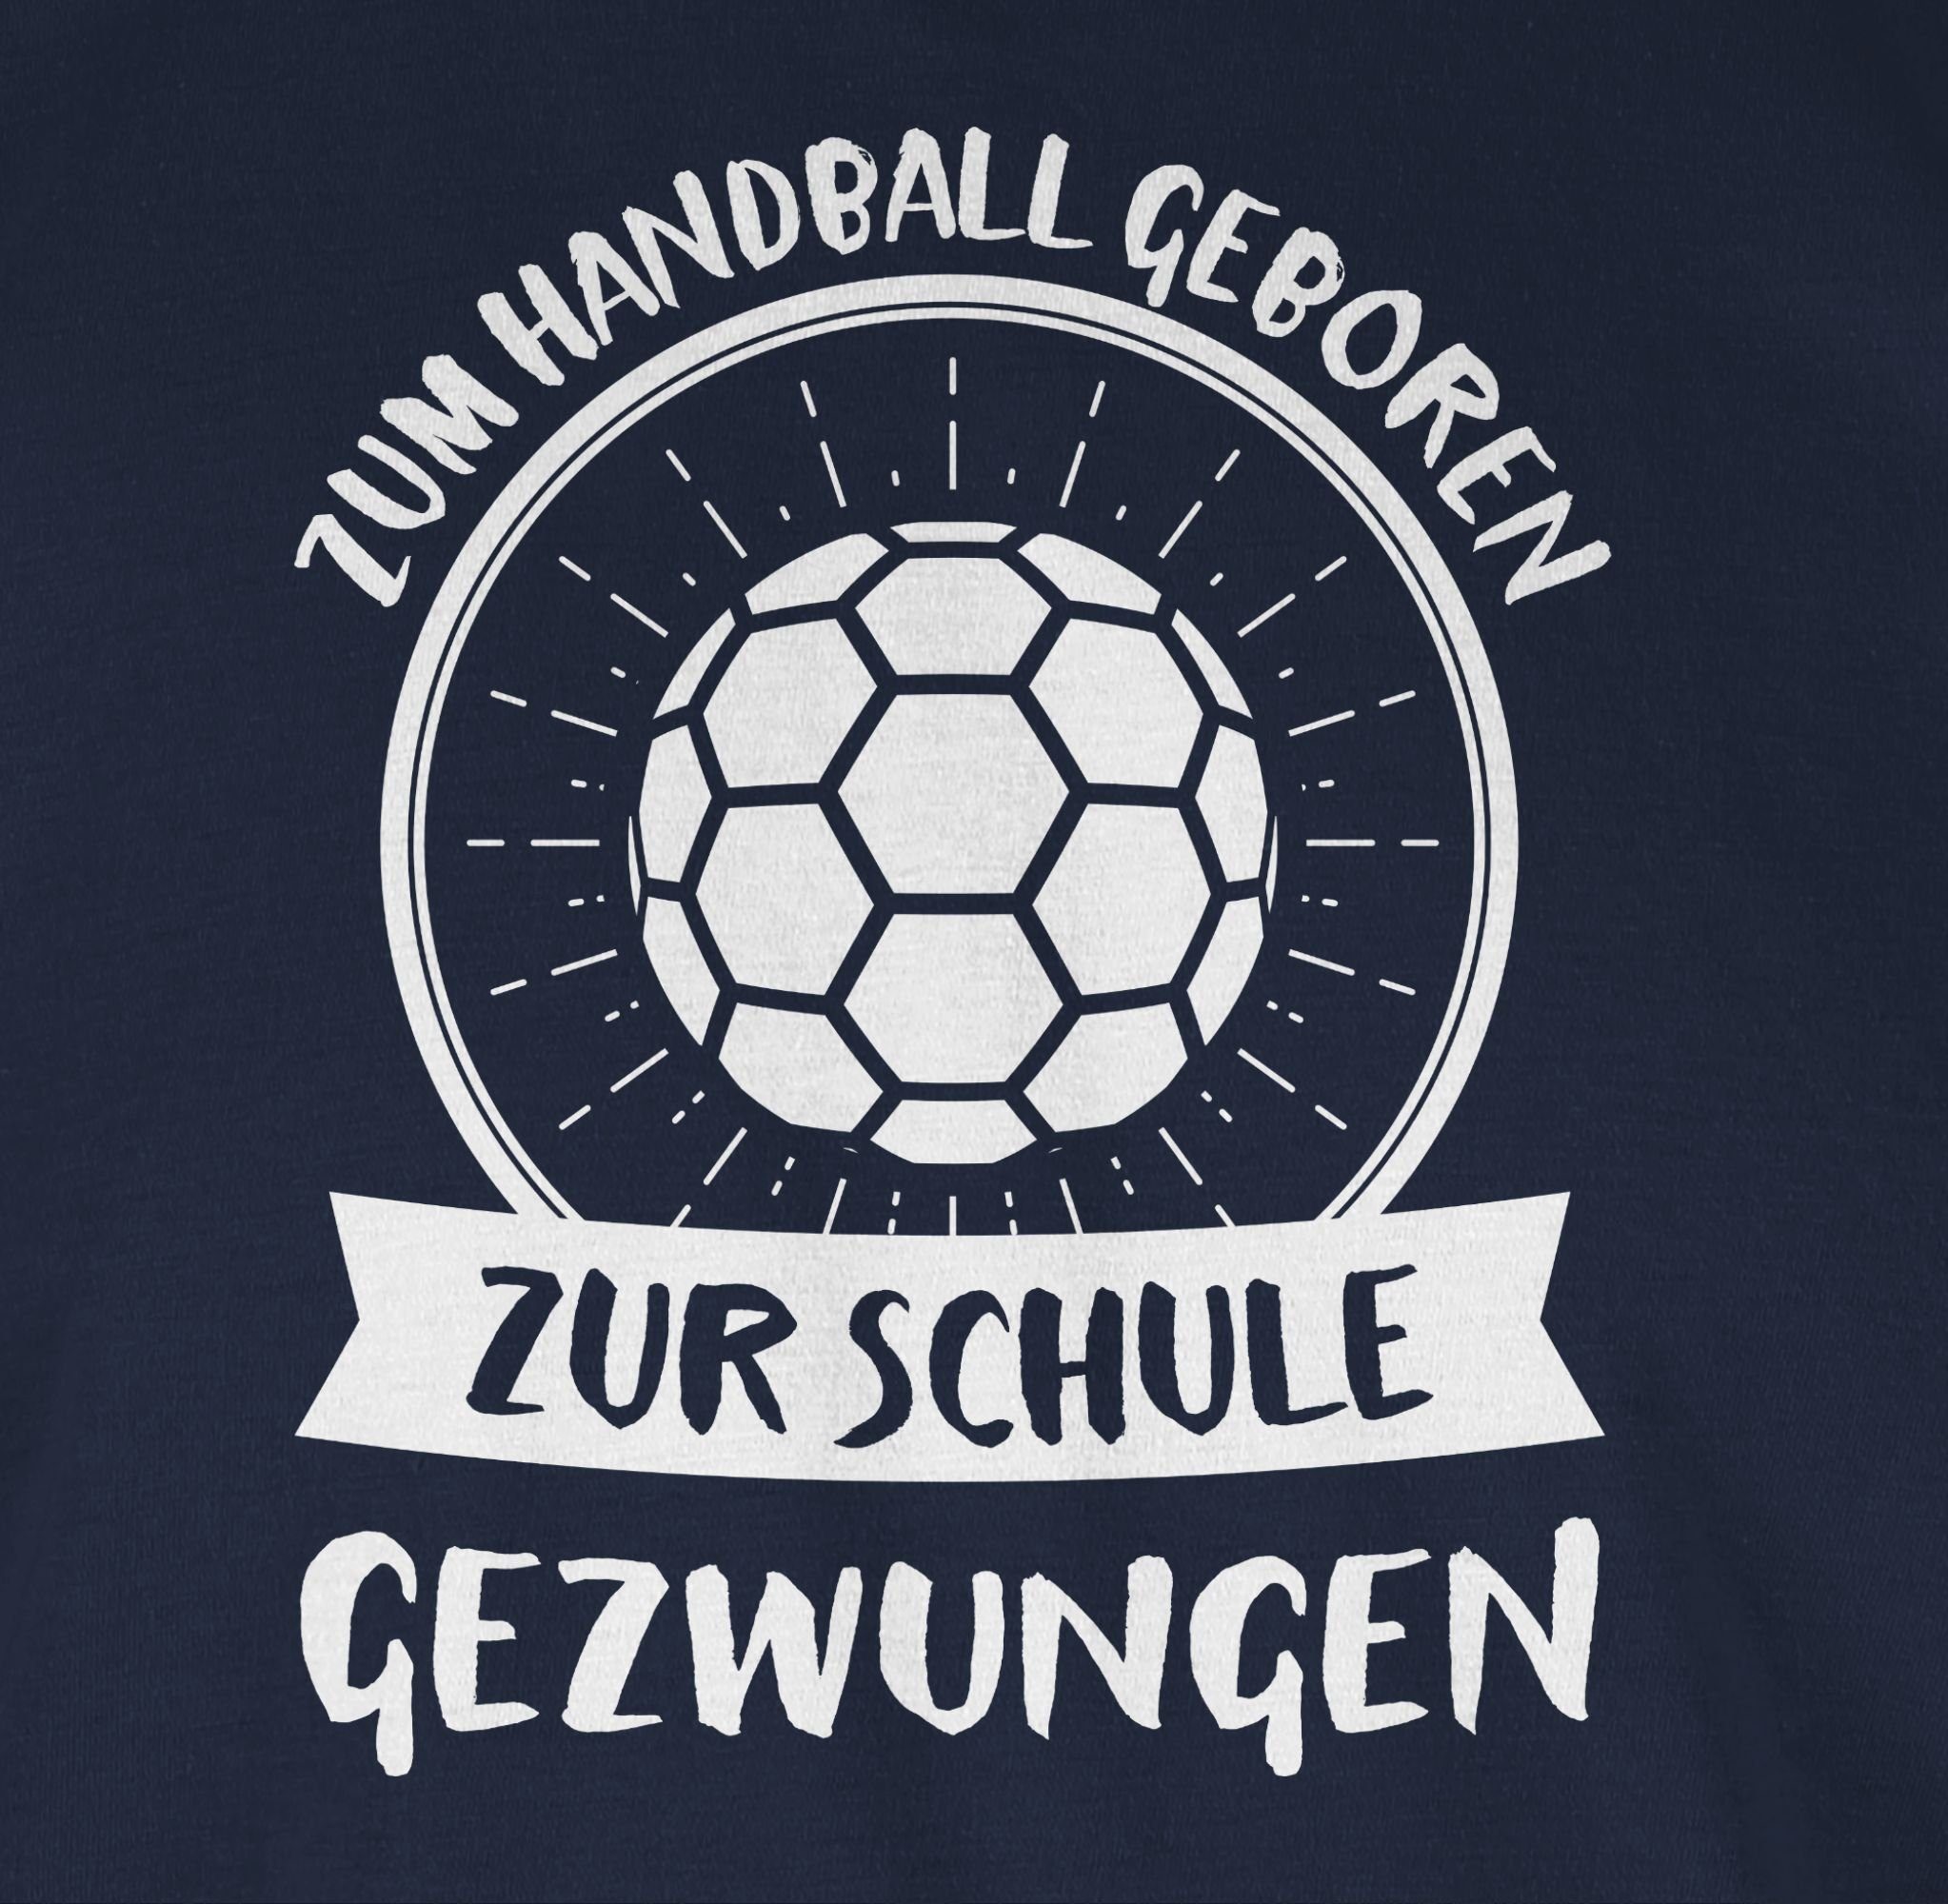 zur Navy WM Zum Schule geboren Handball 2 gezwungen 2023 Ersatz Blau Trikot Shirtracer T-Shirt Handball